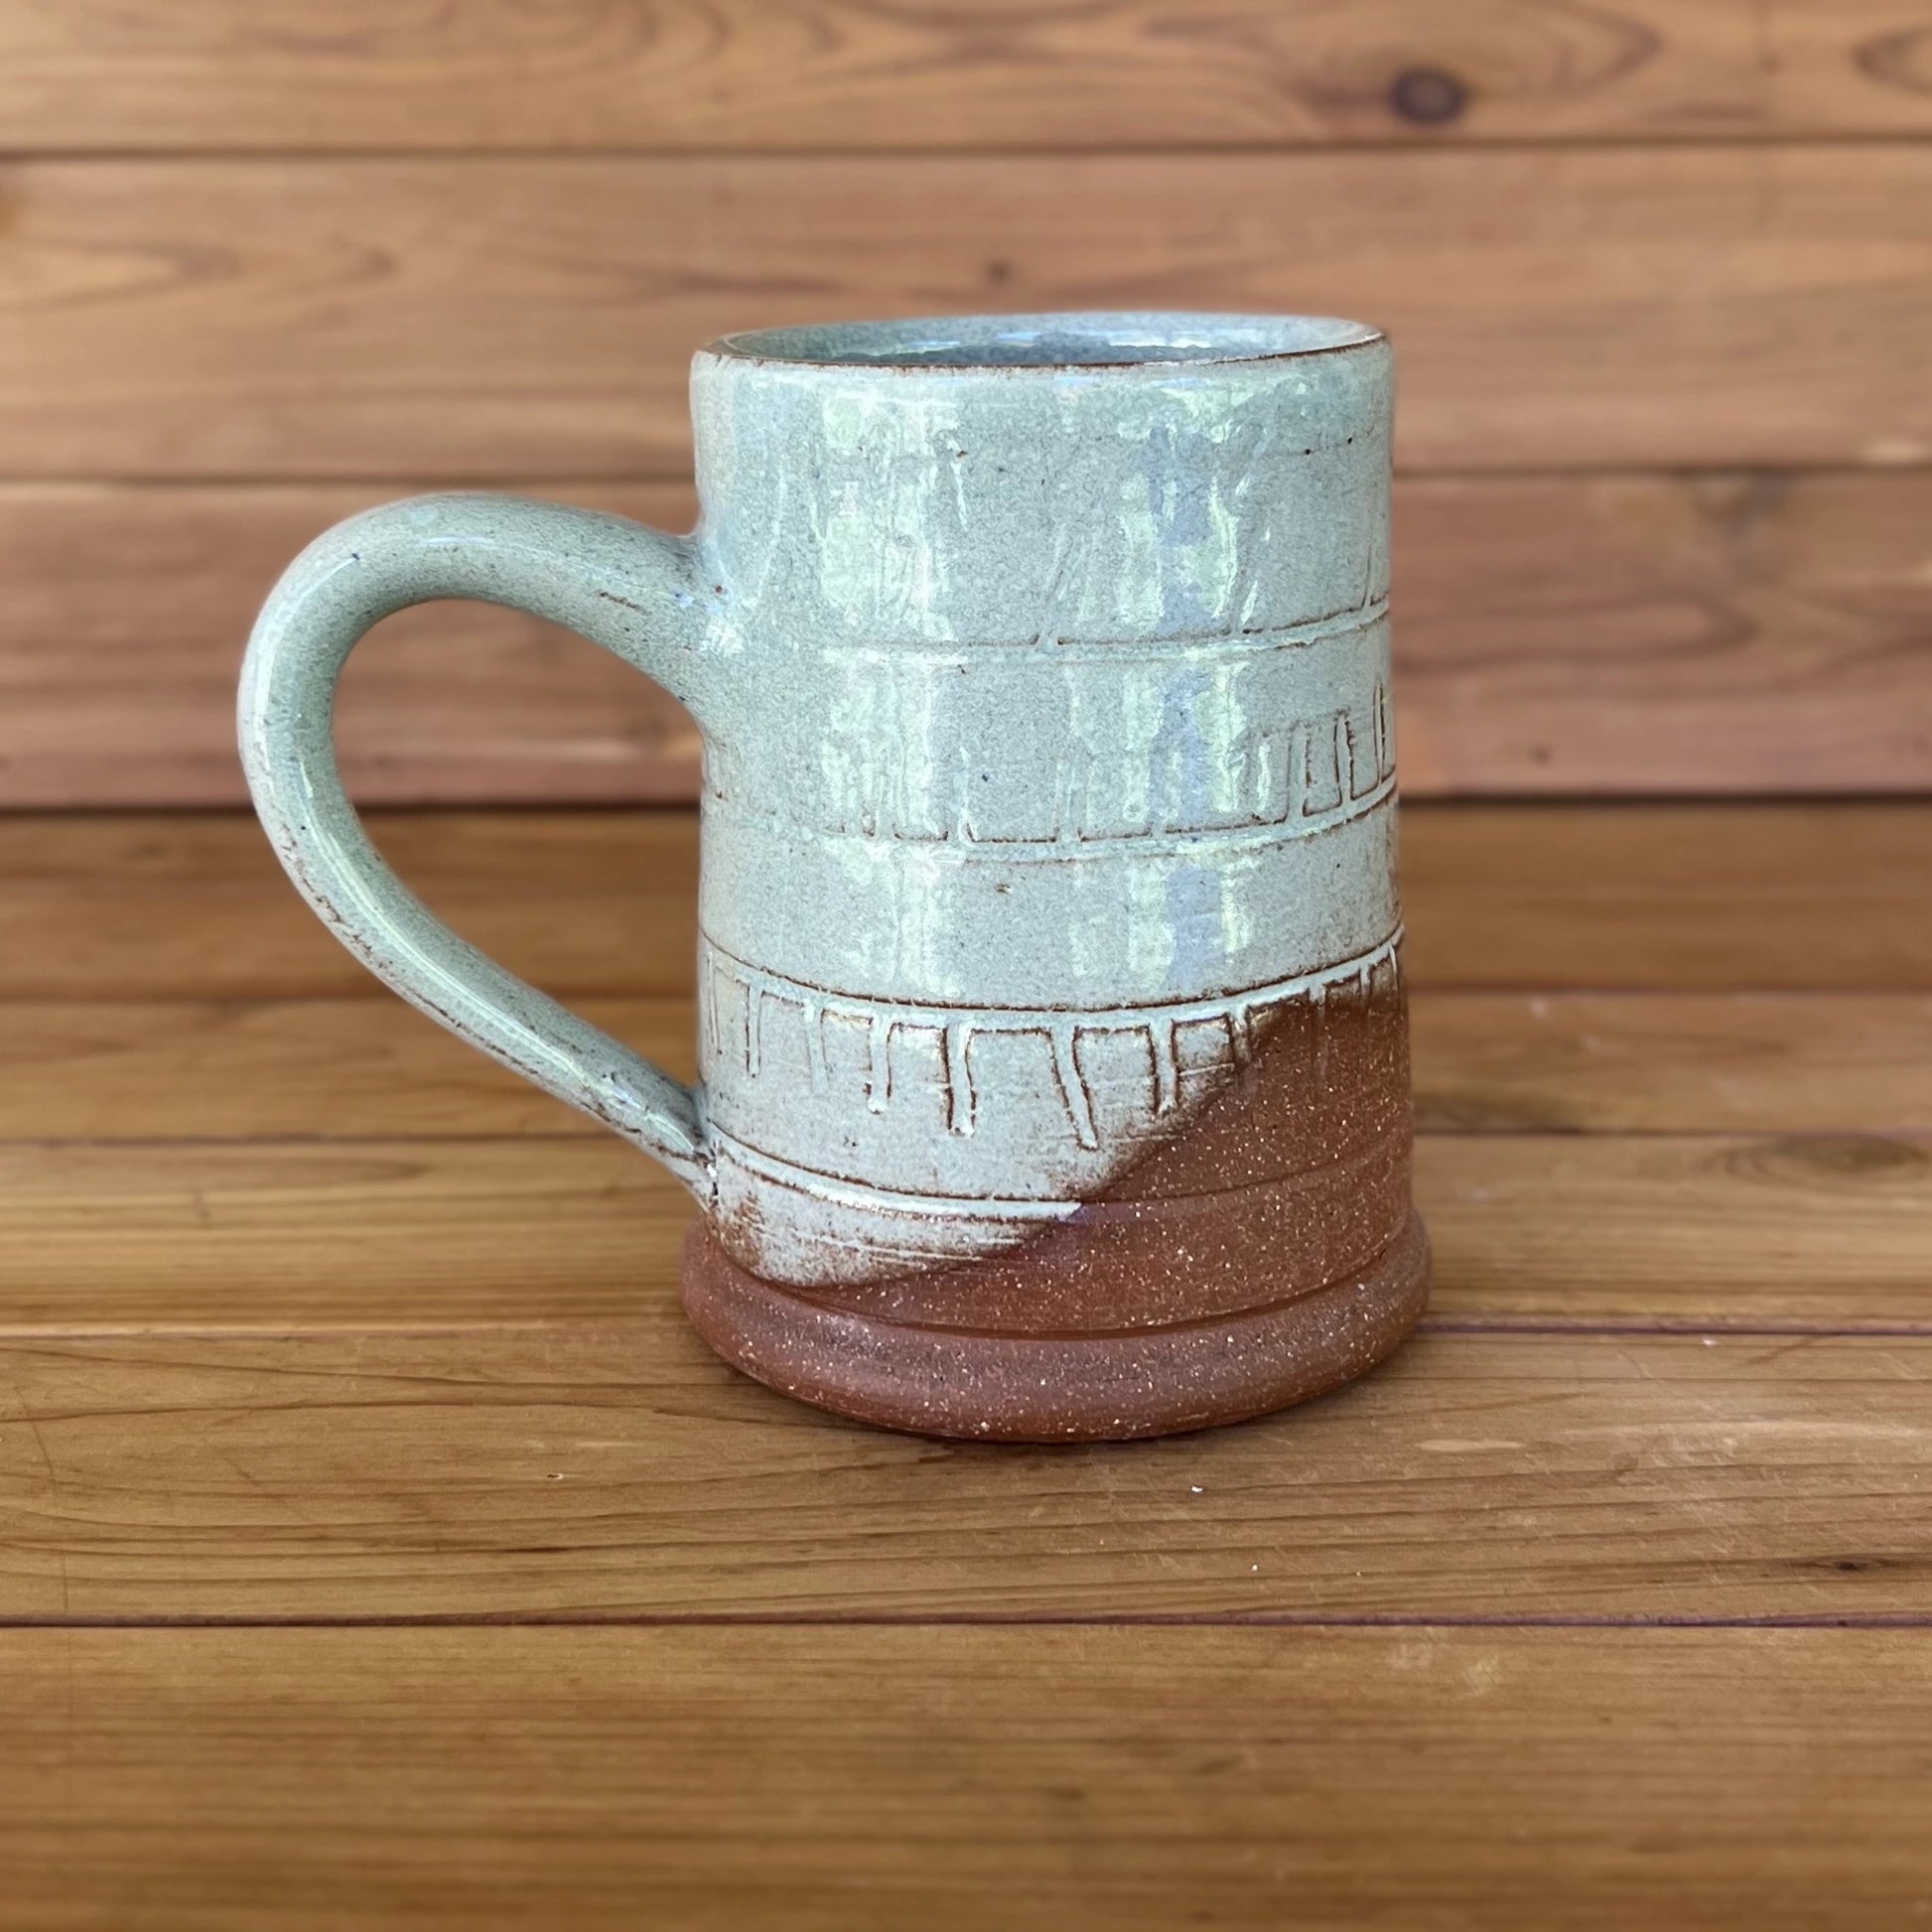 One carved red stoneware ceramic coffee mug with a blue grey glaze